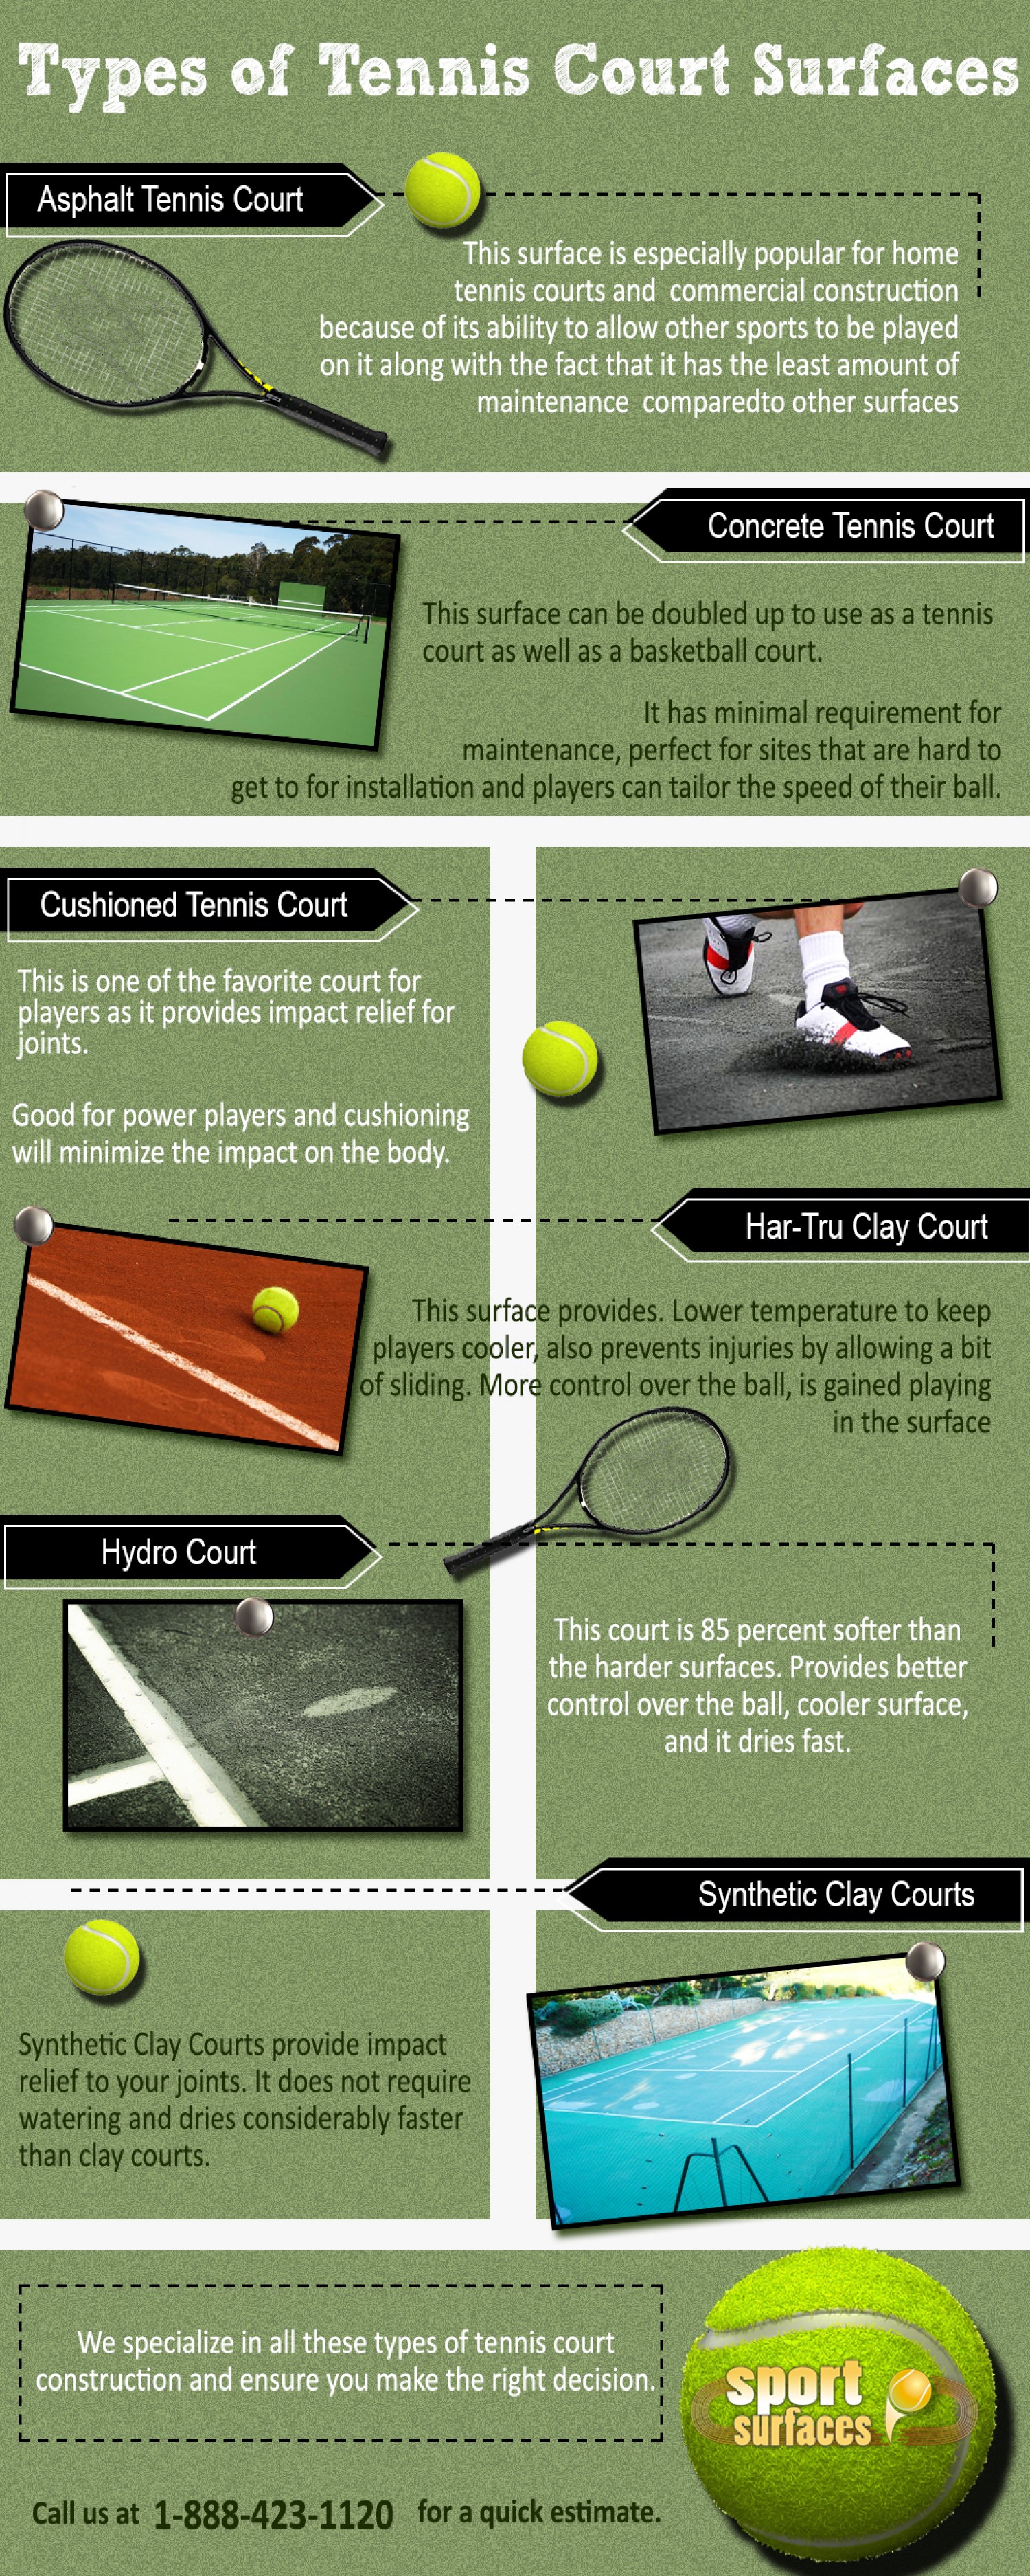 20 Amazing Infographics On Tennis - Infographics | Graphs.net1500 x 3750